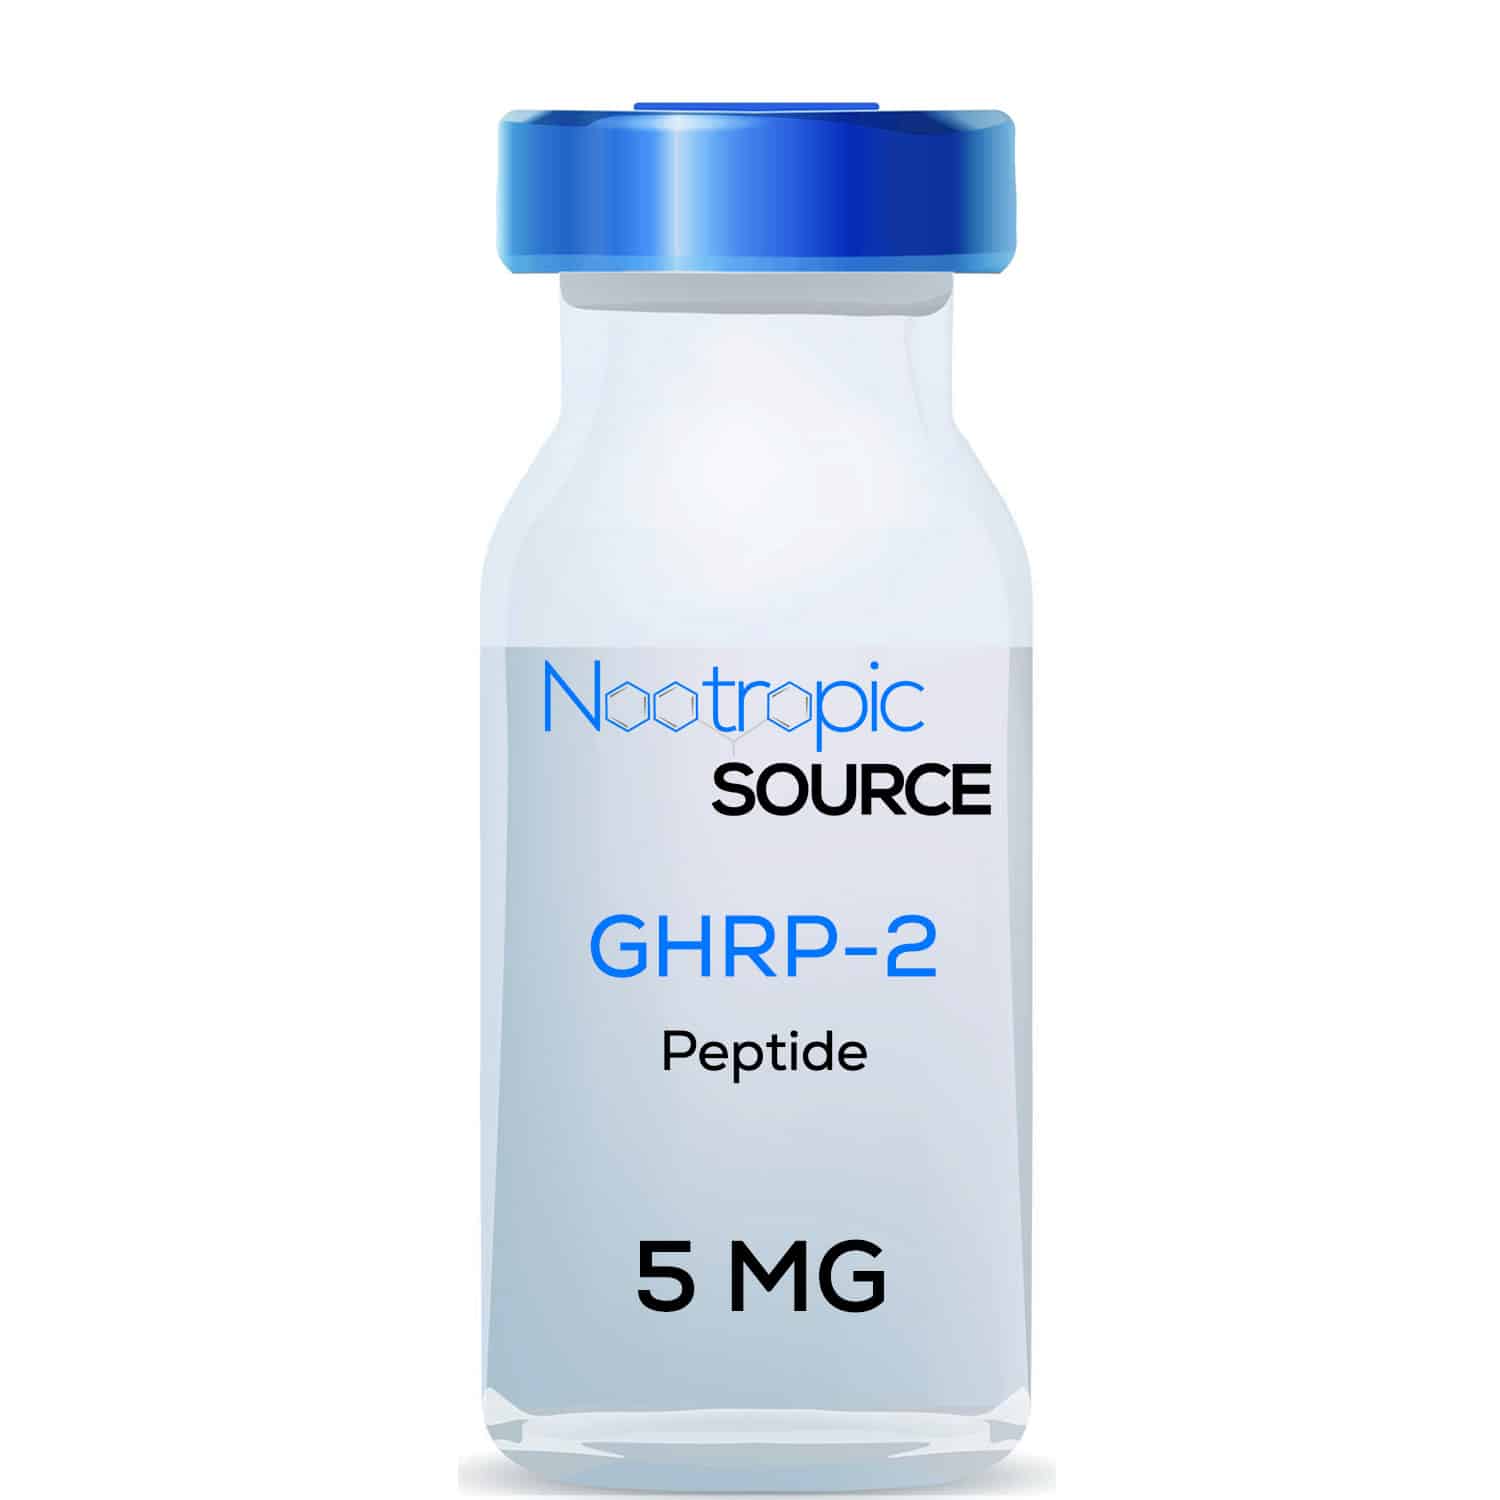 GHRP-2 Peptide